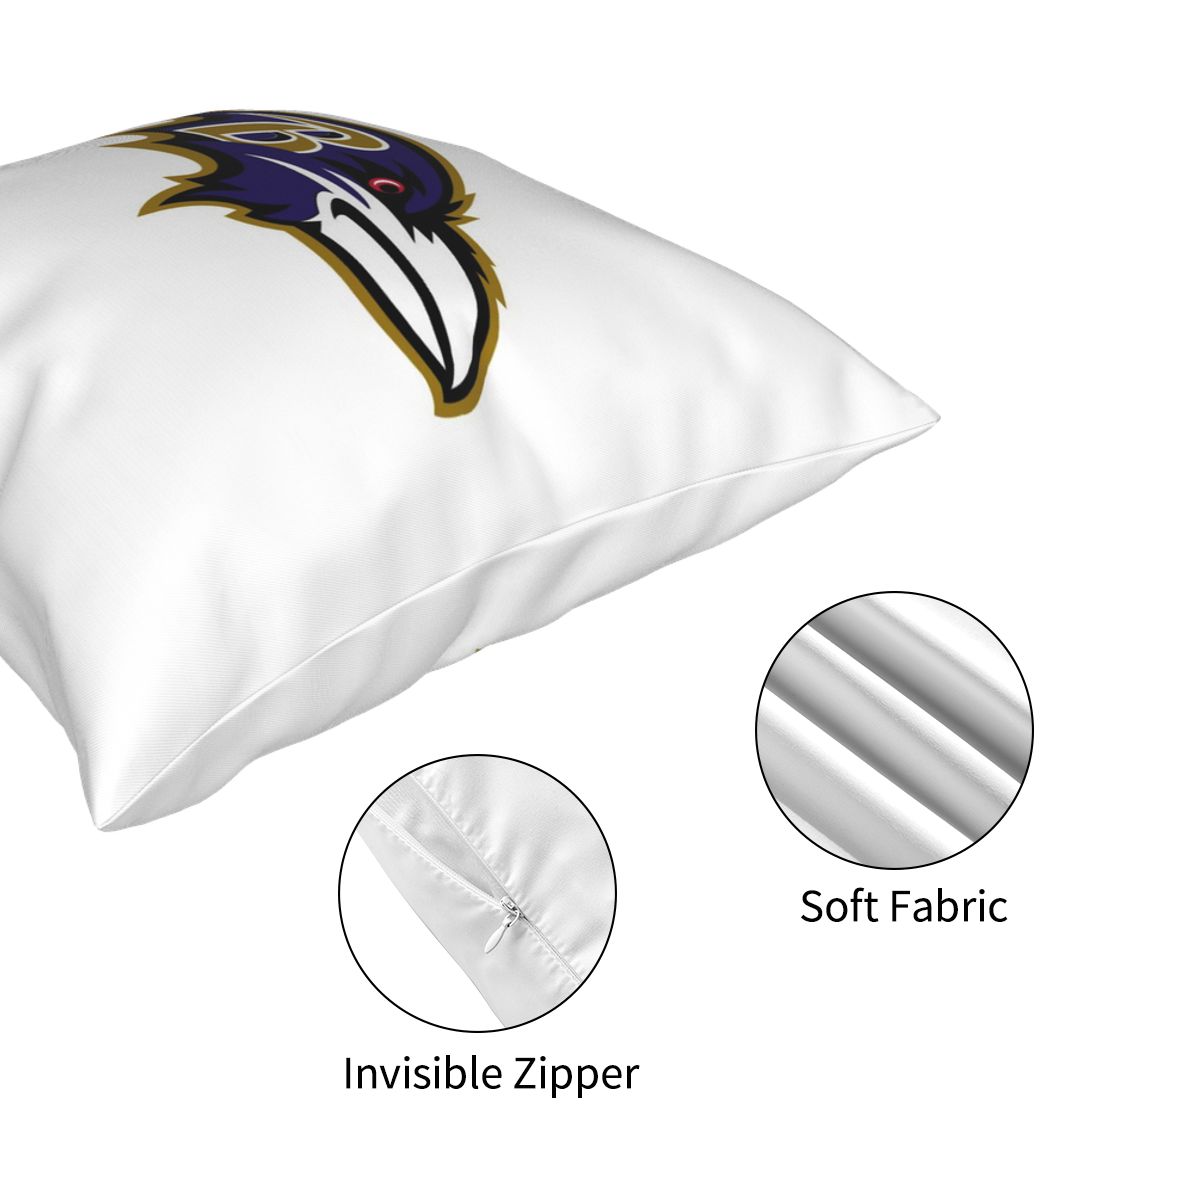 Custom Decorative Football Pillow Case Baltimore Ravens White Pillowcase Personalized Throw Pillow Covers